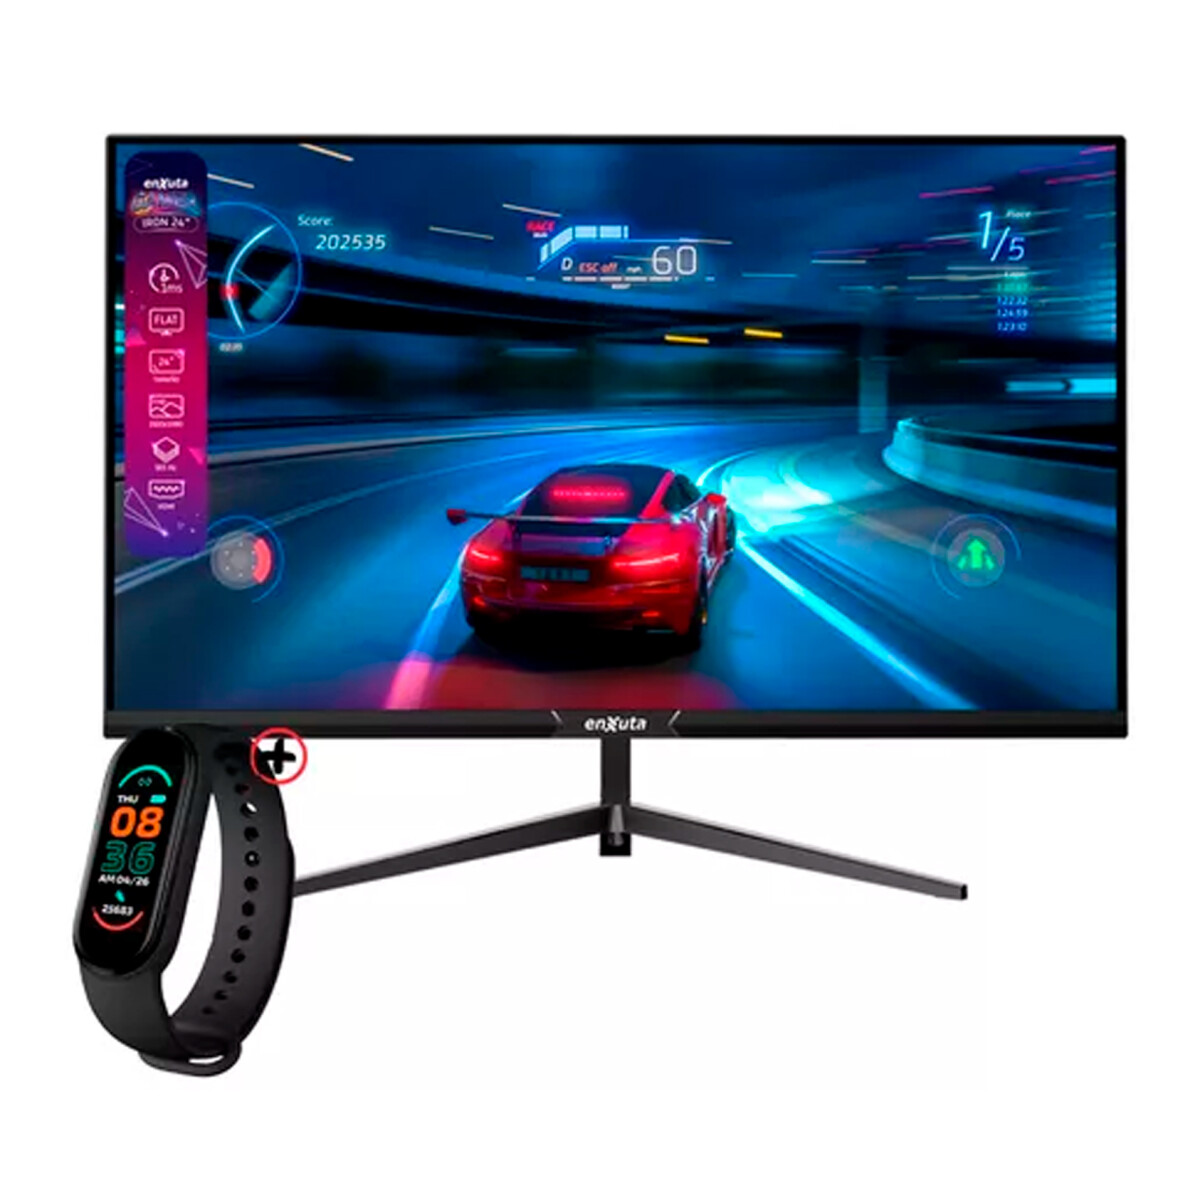 Monitor Gamer Enxuta Iron 24'' PuLG Full Hd Hdmi Usb + Smartwatch 